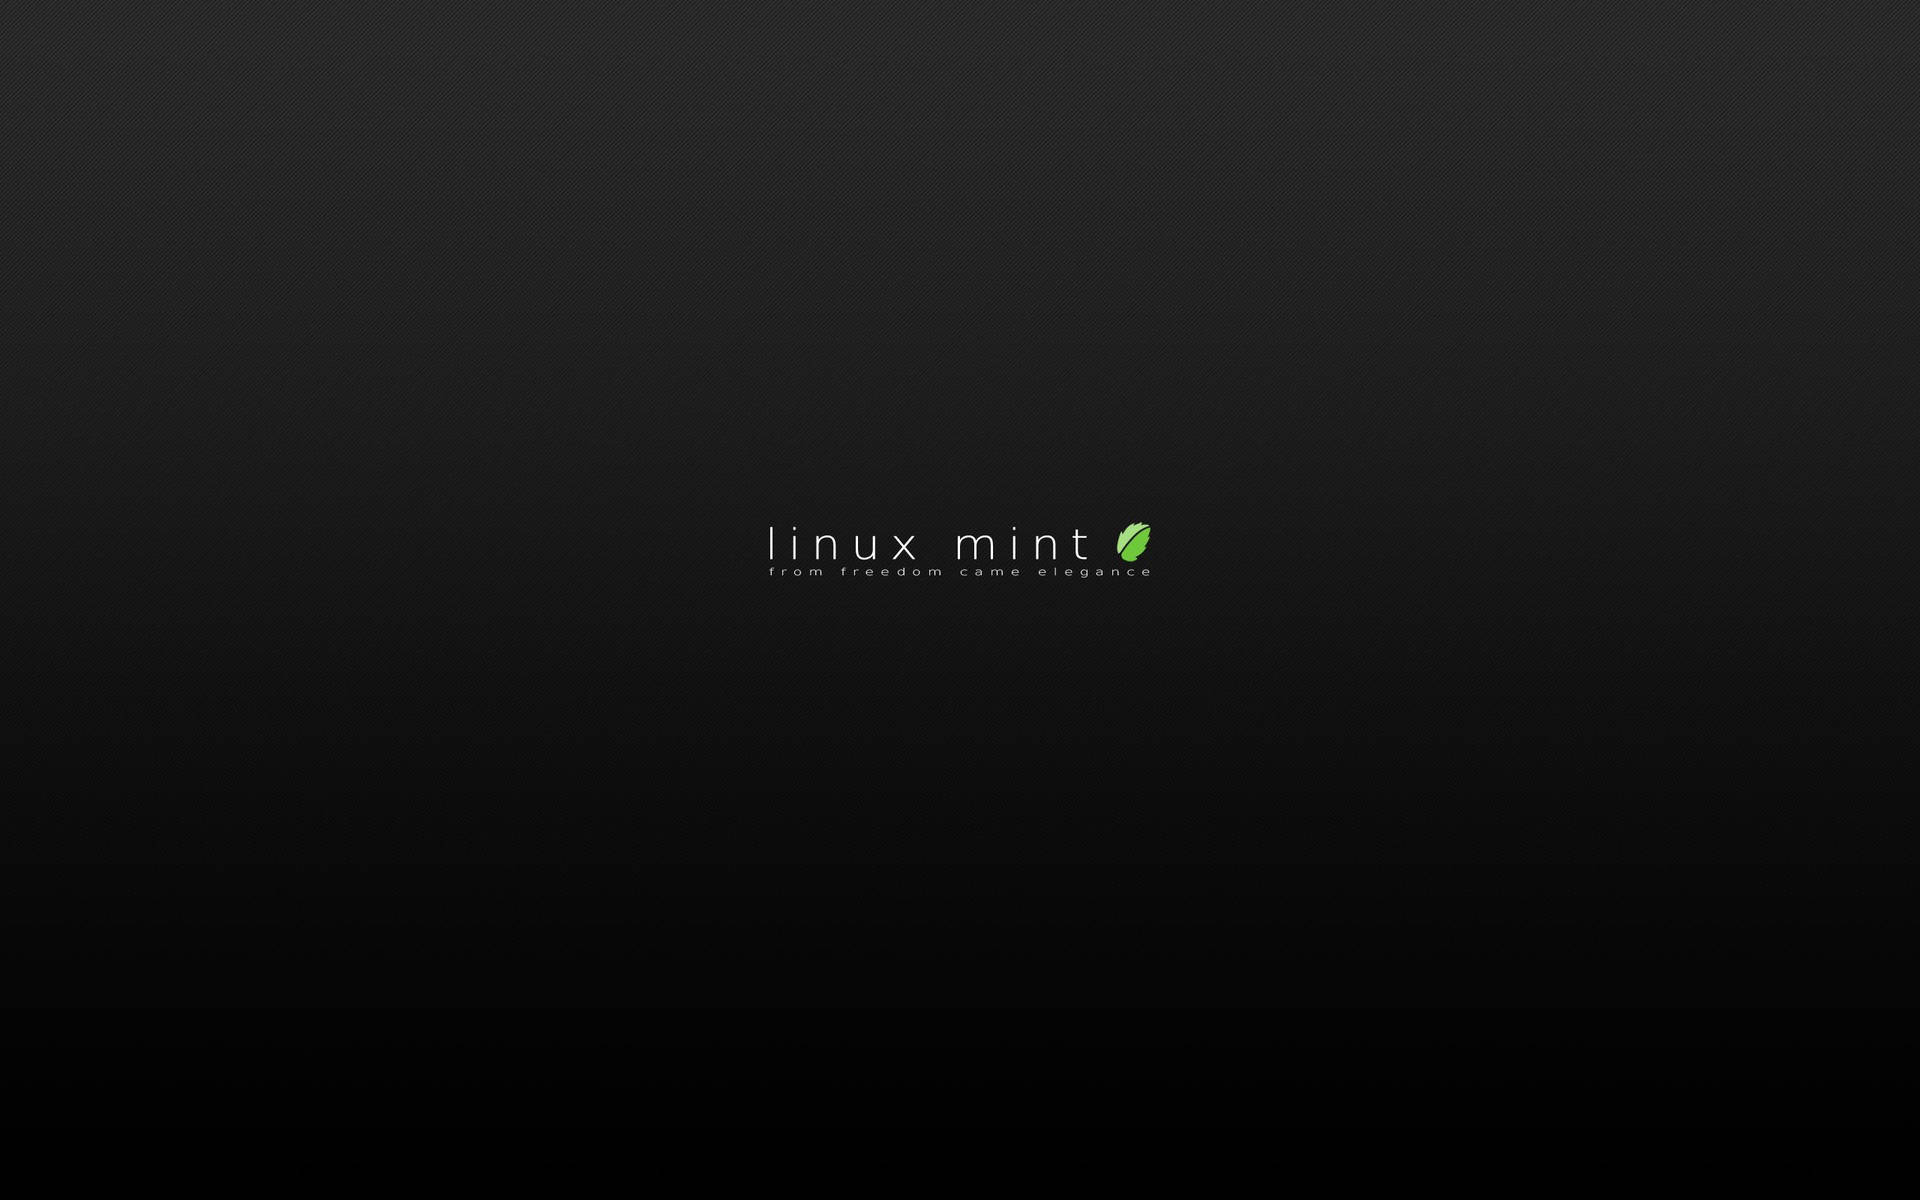 Minimalist Operating System Linux Mint Logo Background